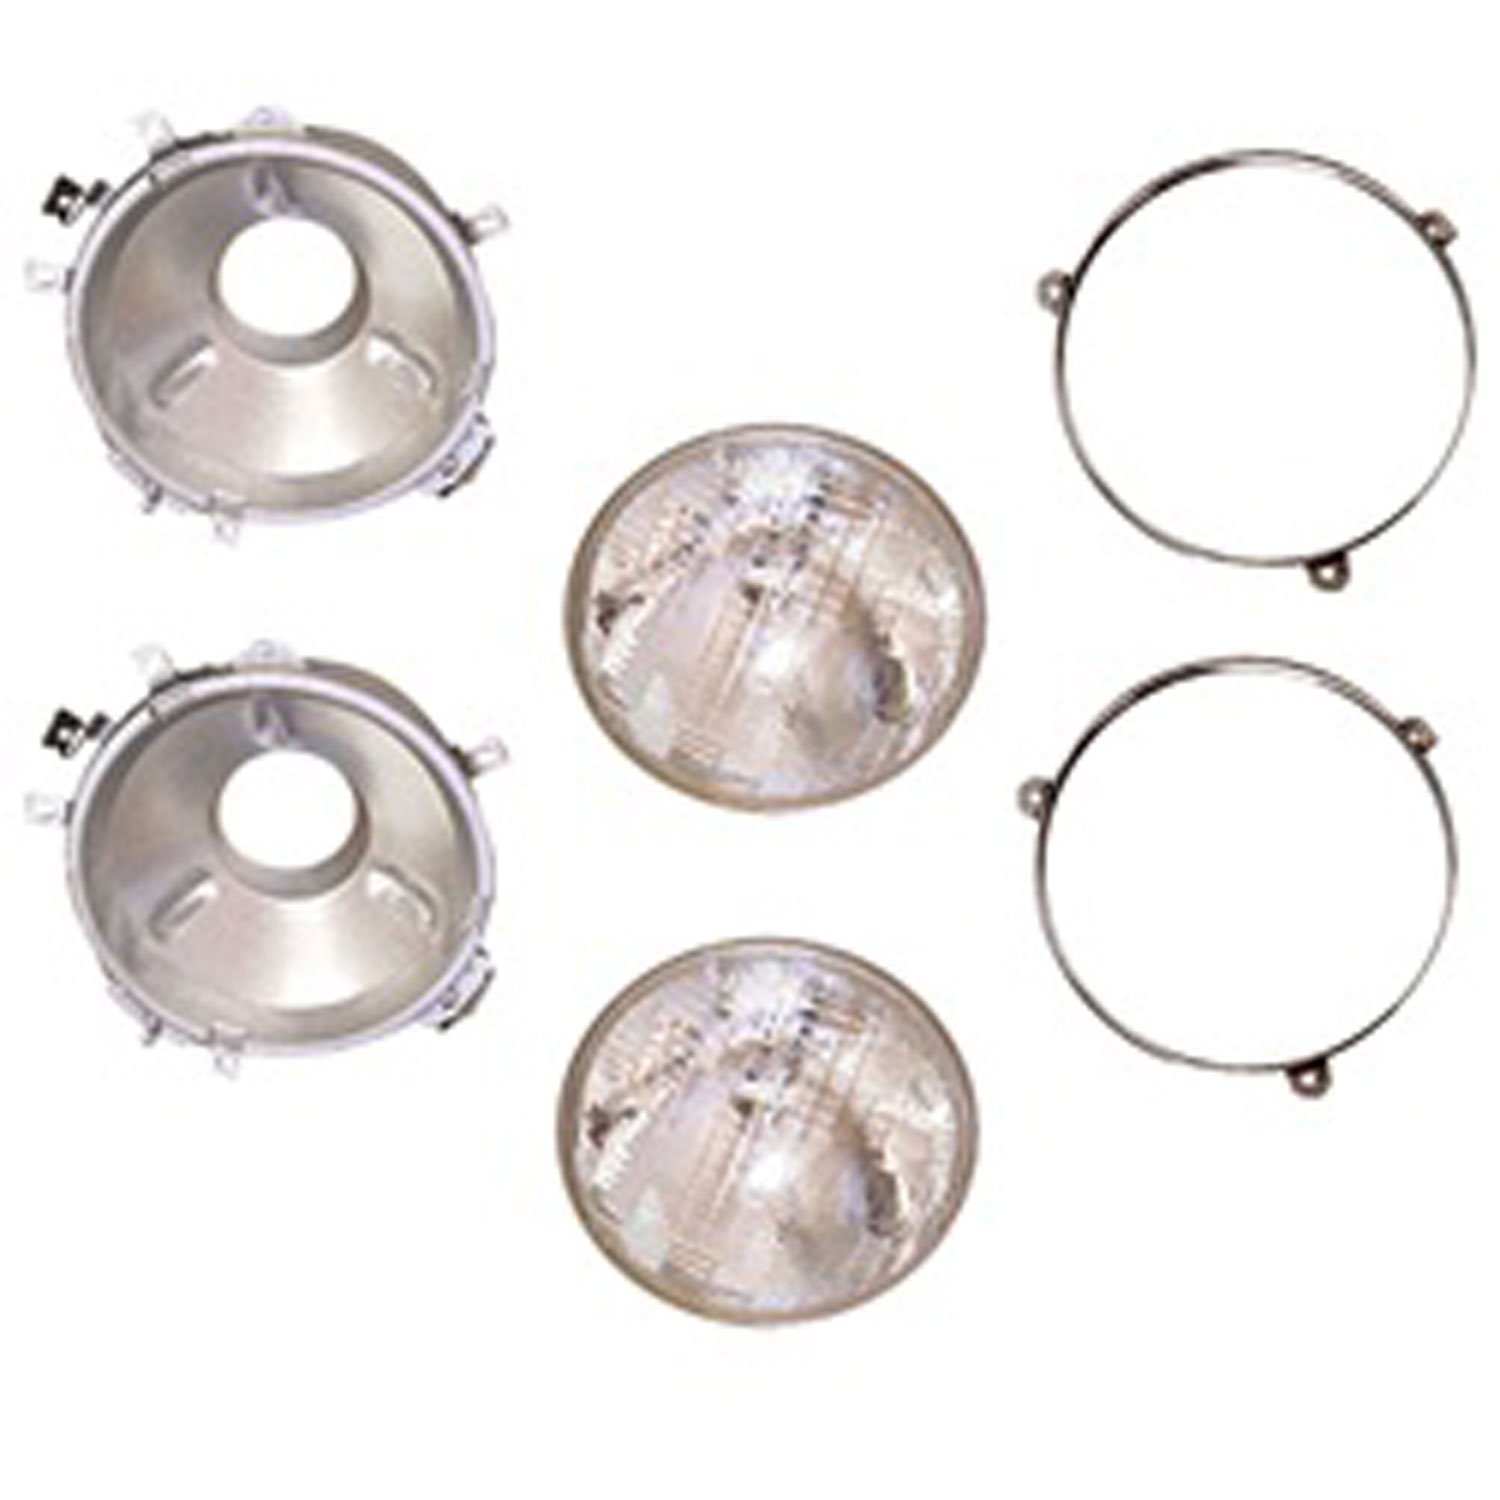 pair of factory replacement headlight assemblies from Omix-ADA